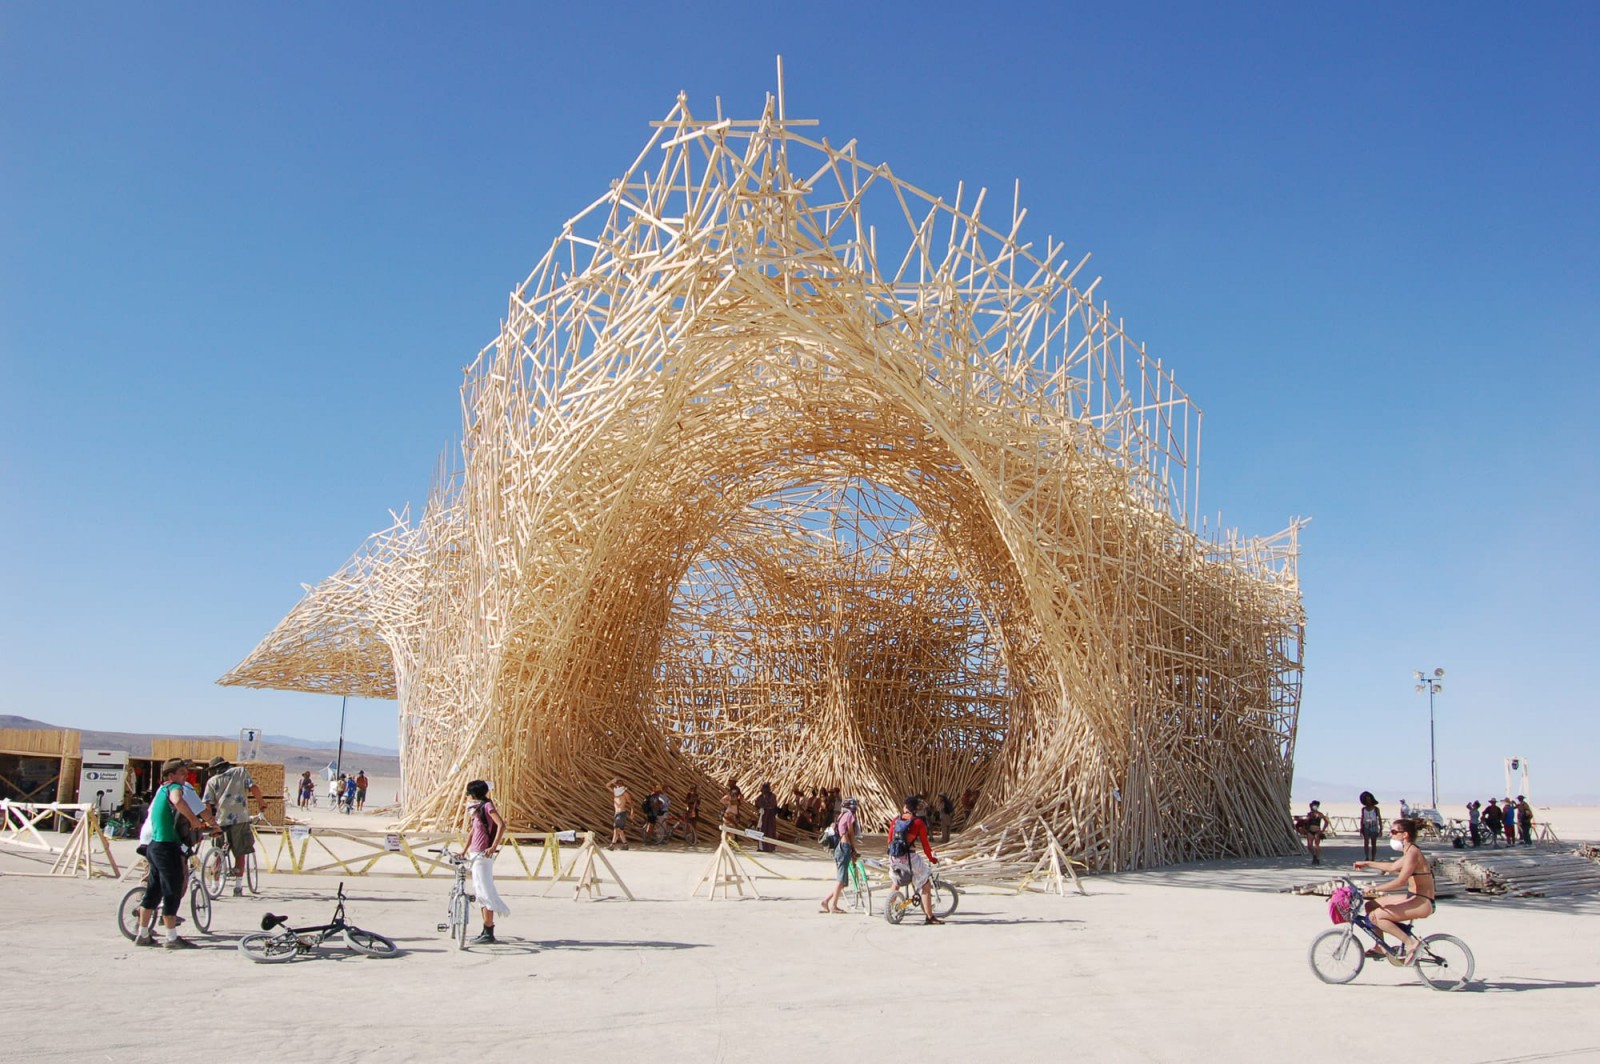 Arquitectura efímera en madera para el festival Burning Man.